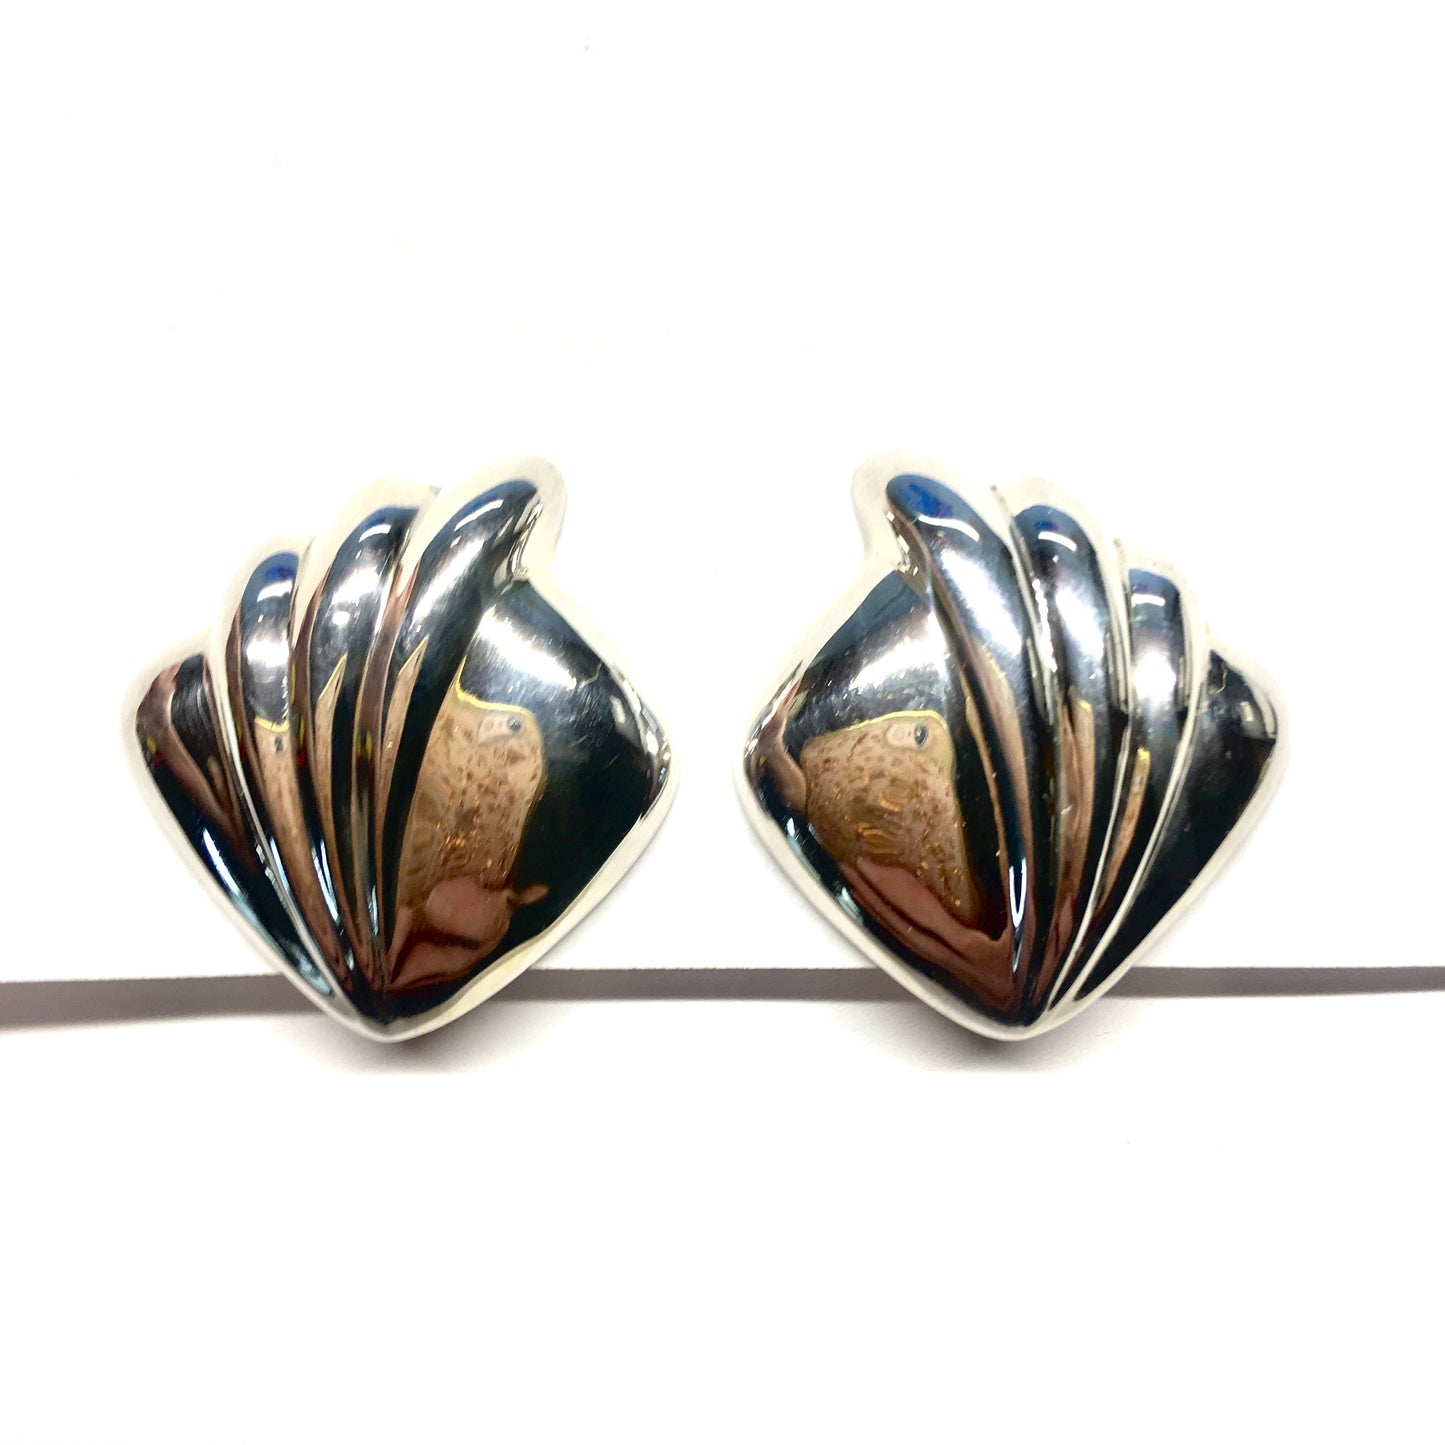 Used Jewelry > Earrings | Womens Sterling Silver A Symmetrical Scalloped Design Clip-On Earrings - Blingschlingers Jewelry